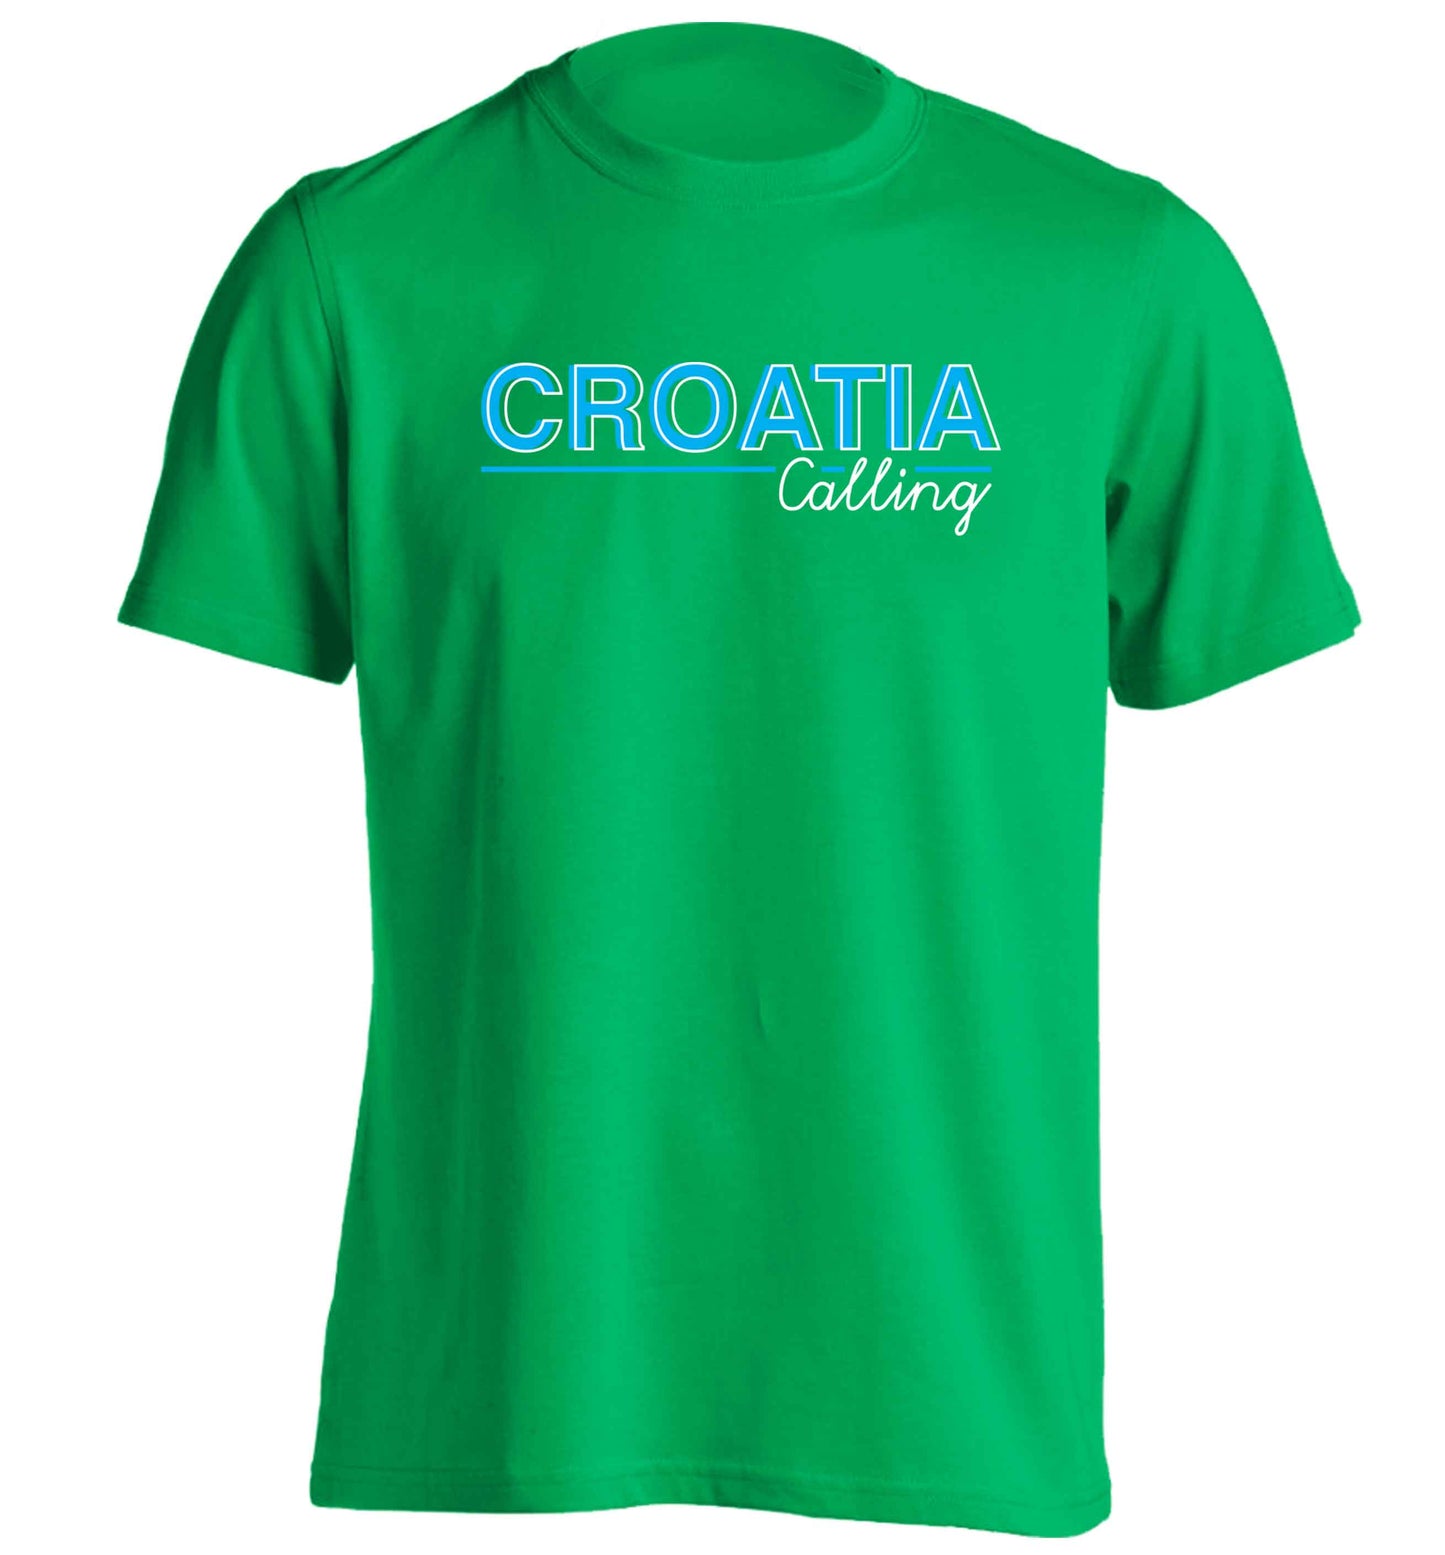 Croatia calling adults unisex green Tshirt 2XL